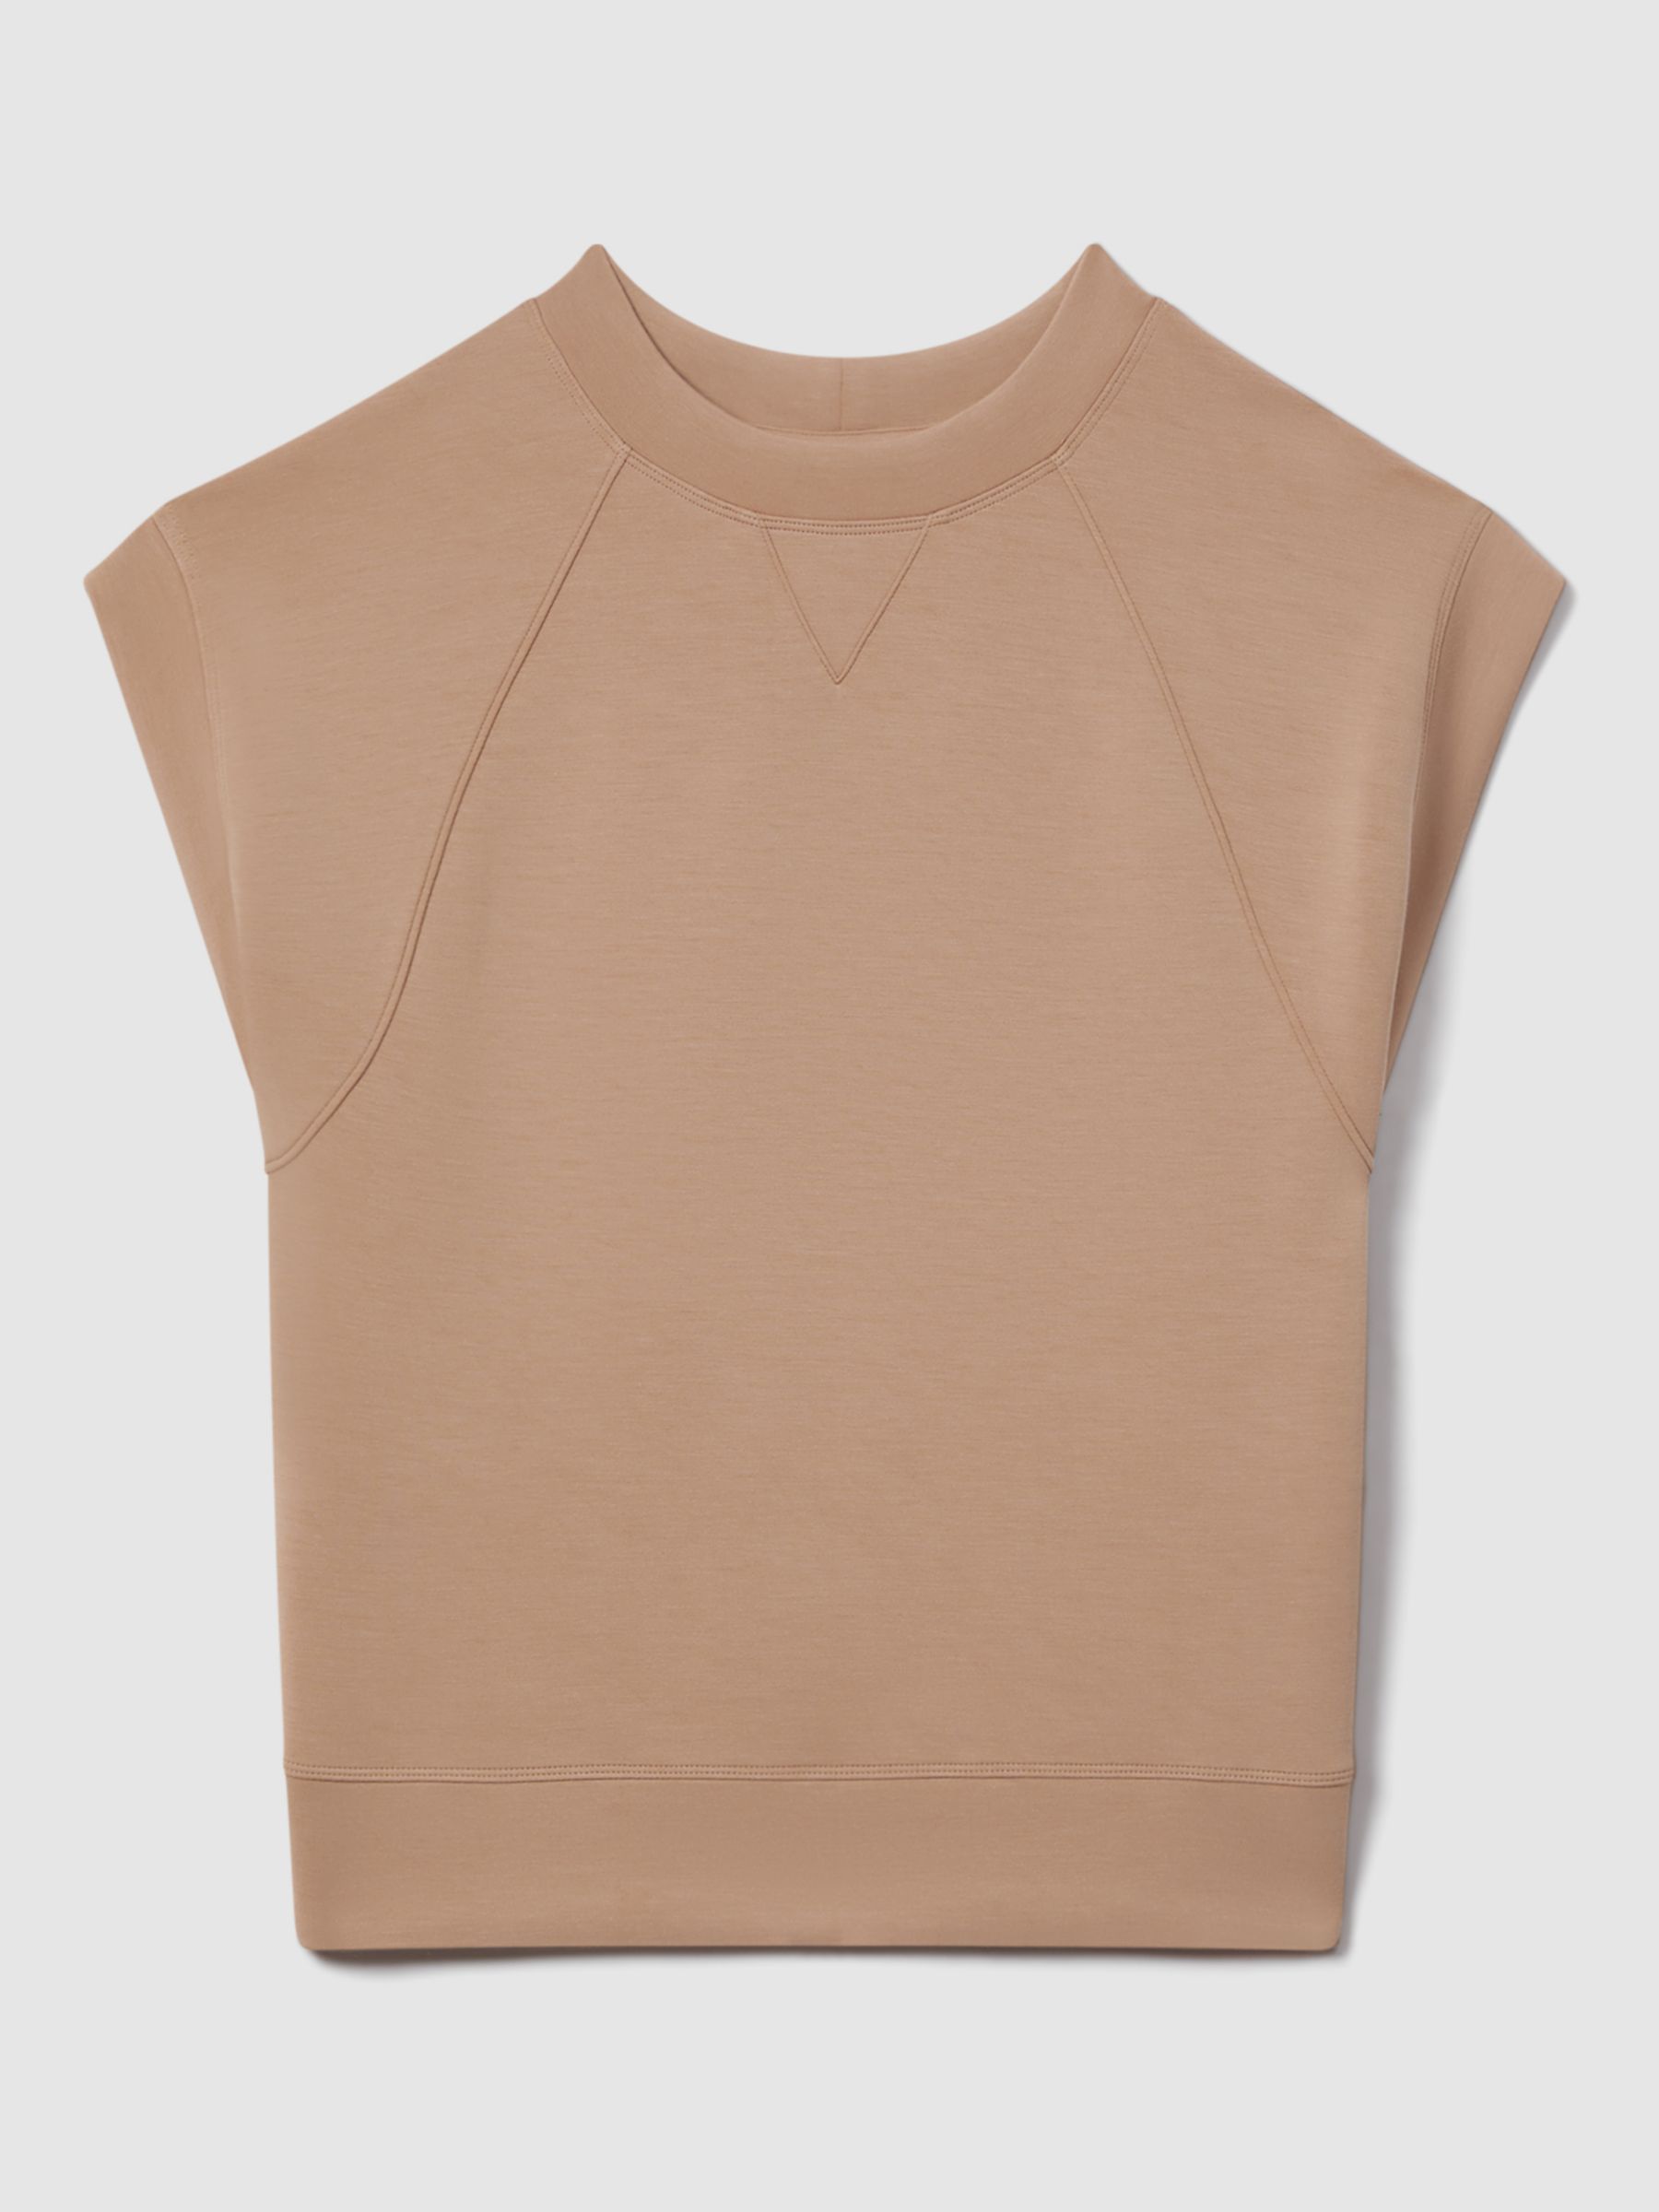 Buy Reiss Joanna Cap Sleeve Sweatshirt Top Online at johnlewis.com